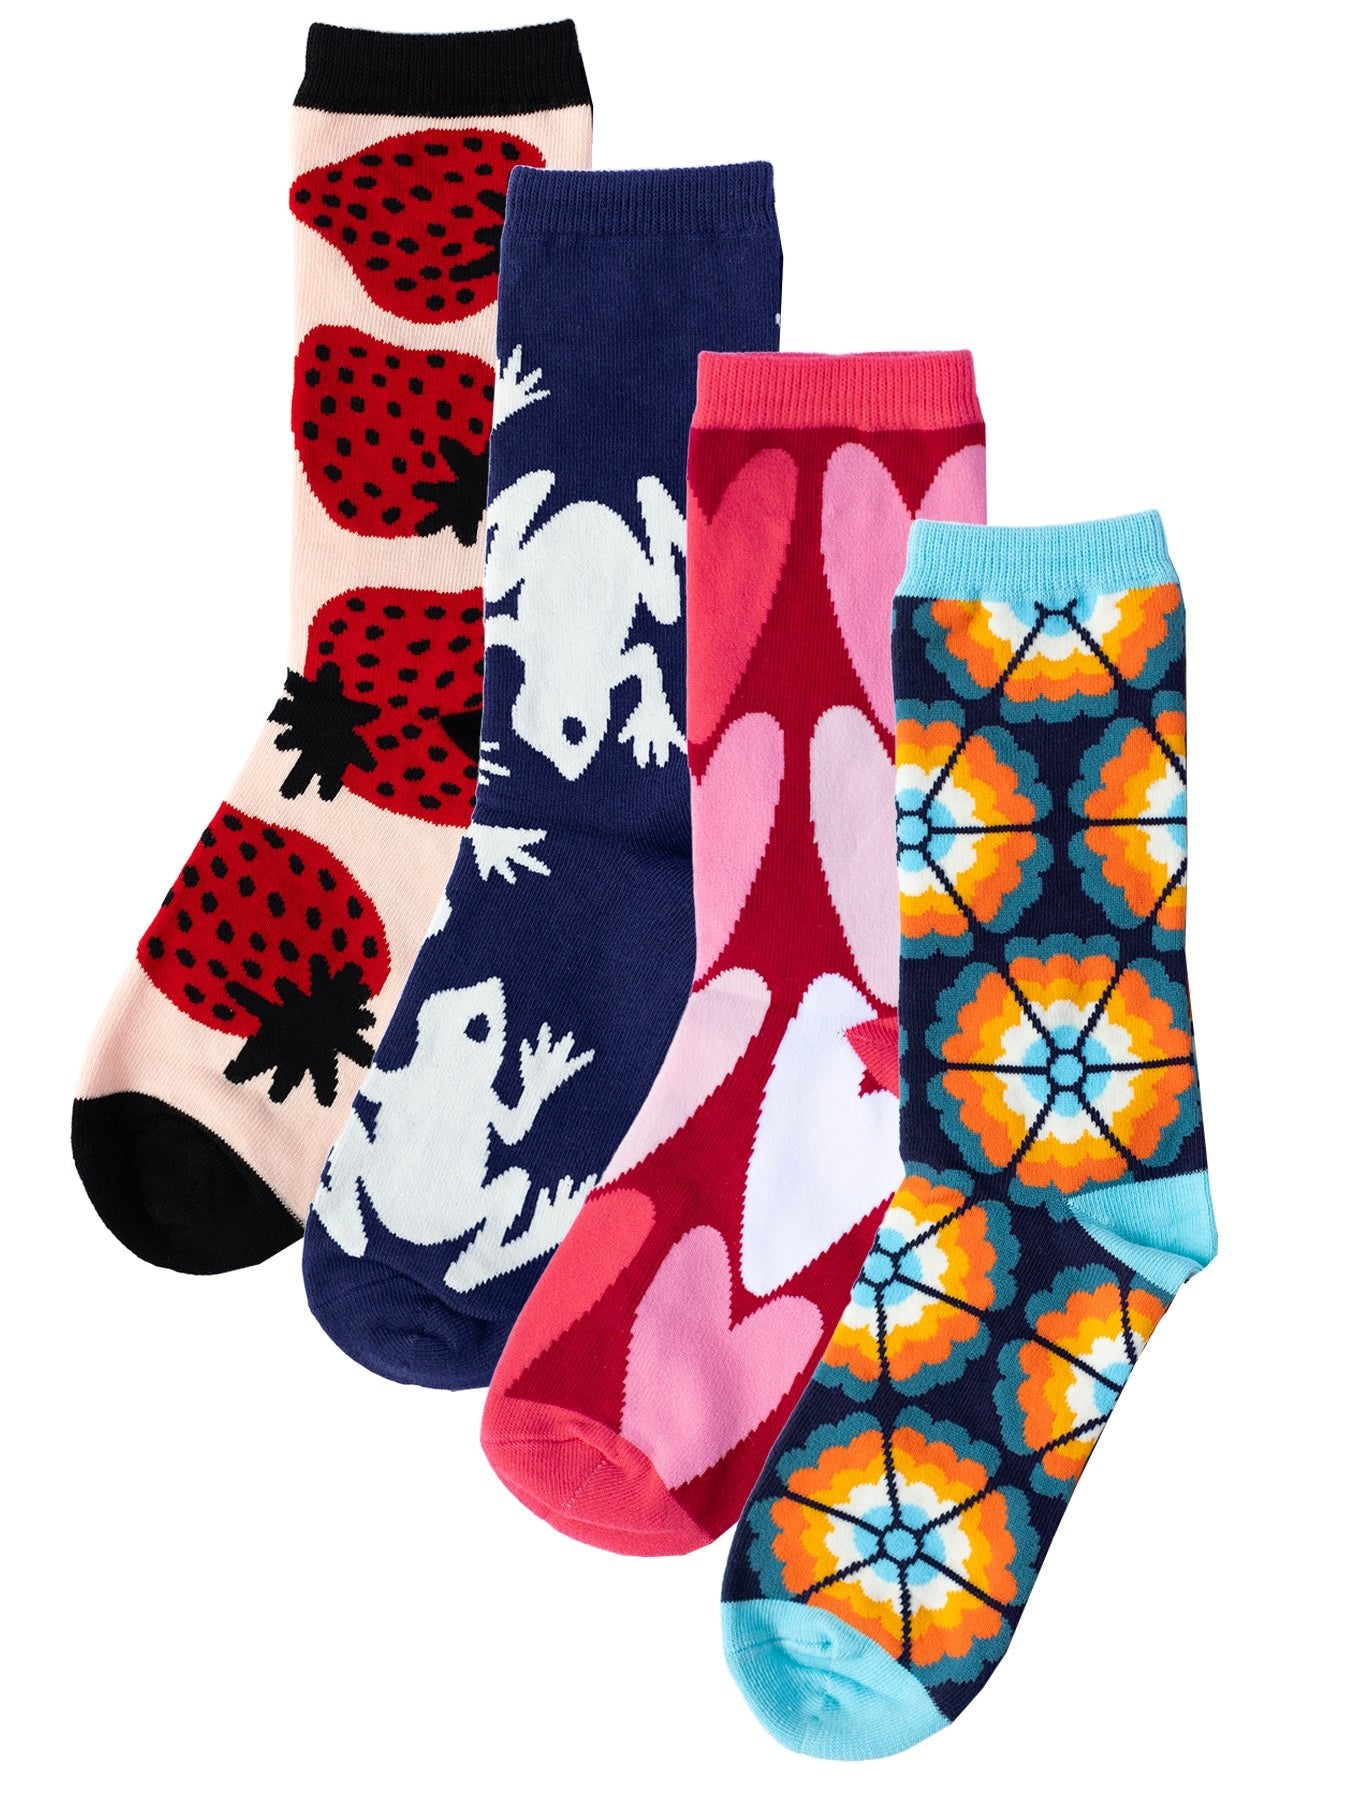 SOCKS Four-Pack - Lesley Evers-colorful socks-crew socks-frogs